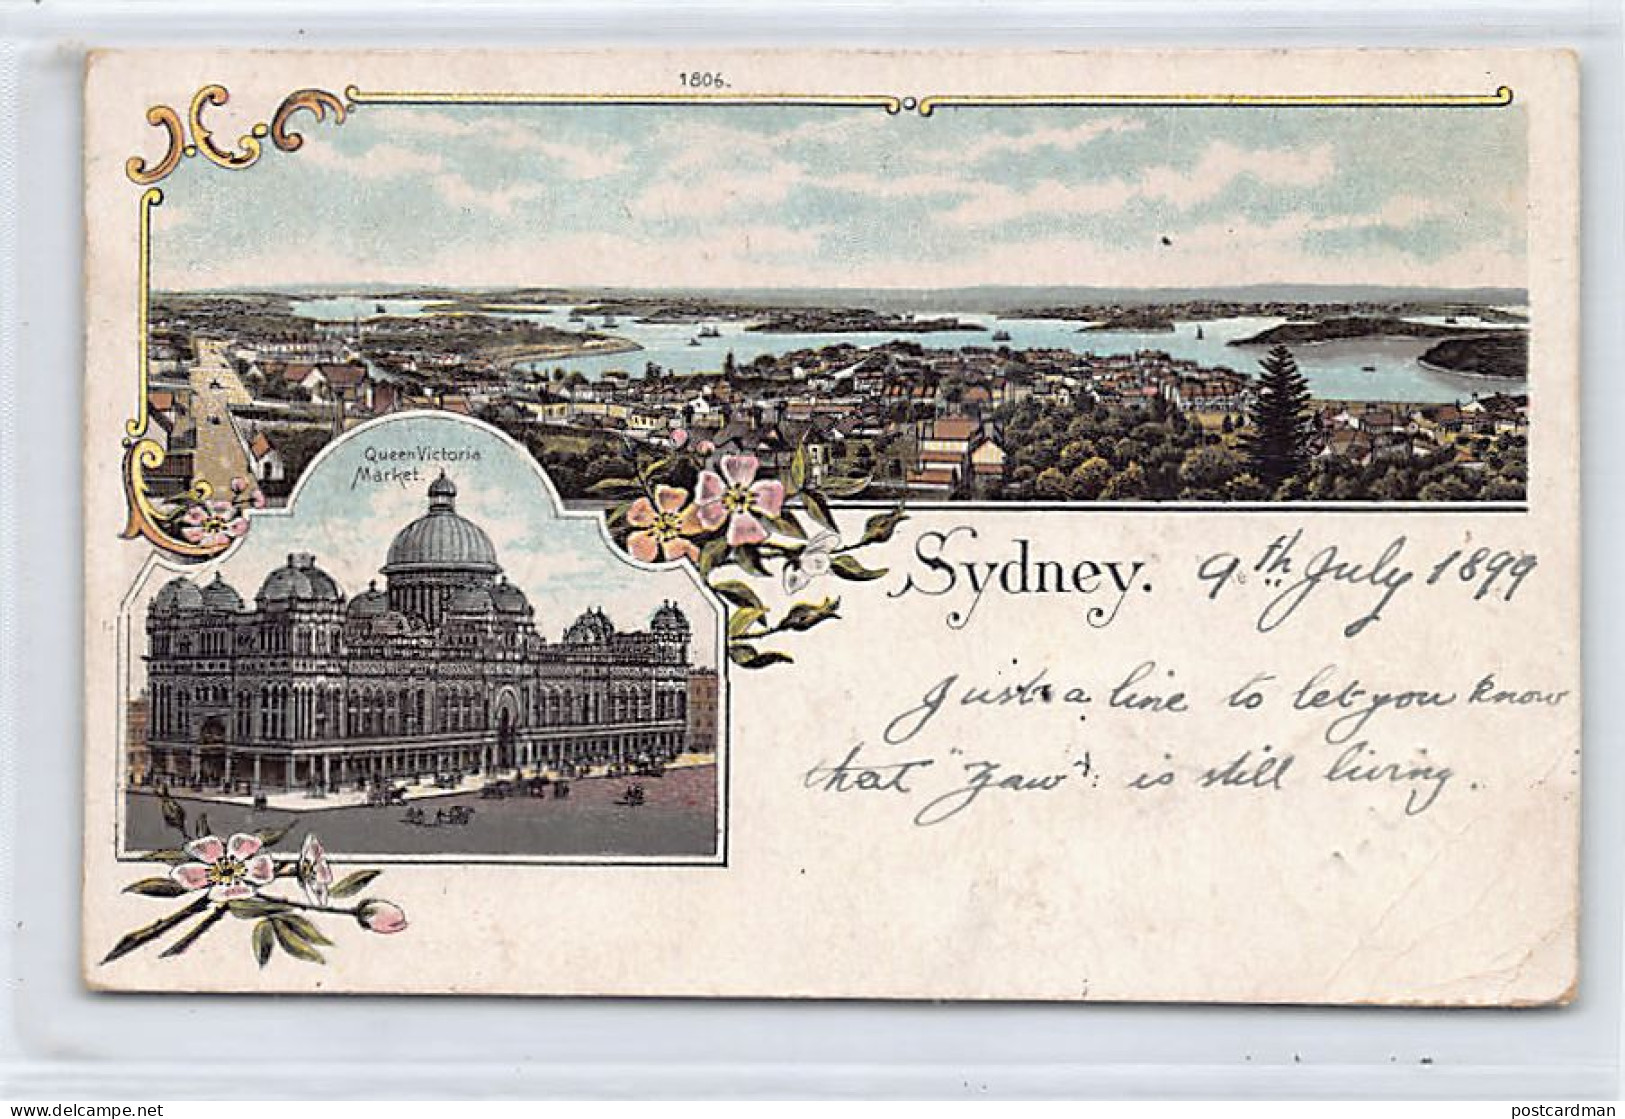 Australia - SYDNEY (NSW) Litho - Queen Victoria Market - Panorama - Publ. Unknown 1806 - Sydney